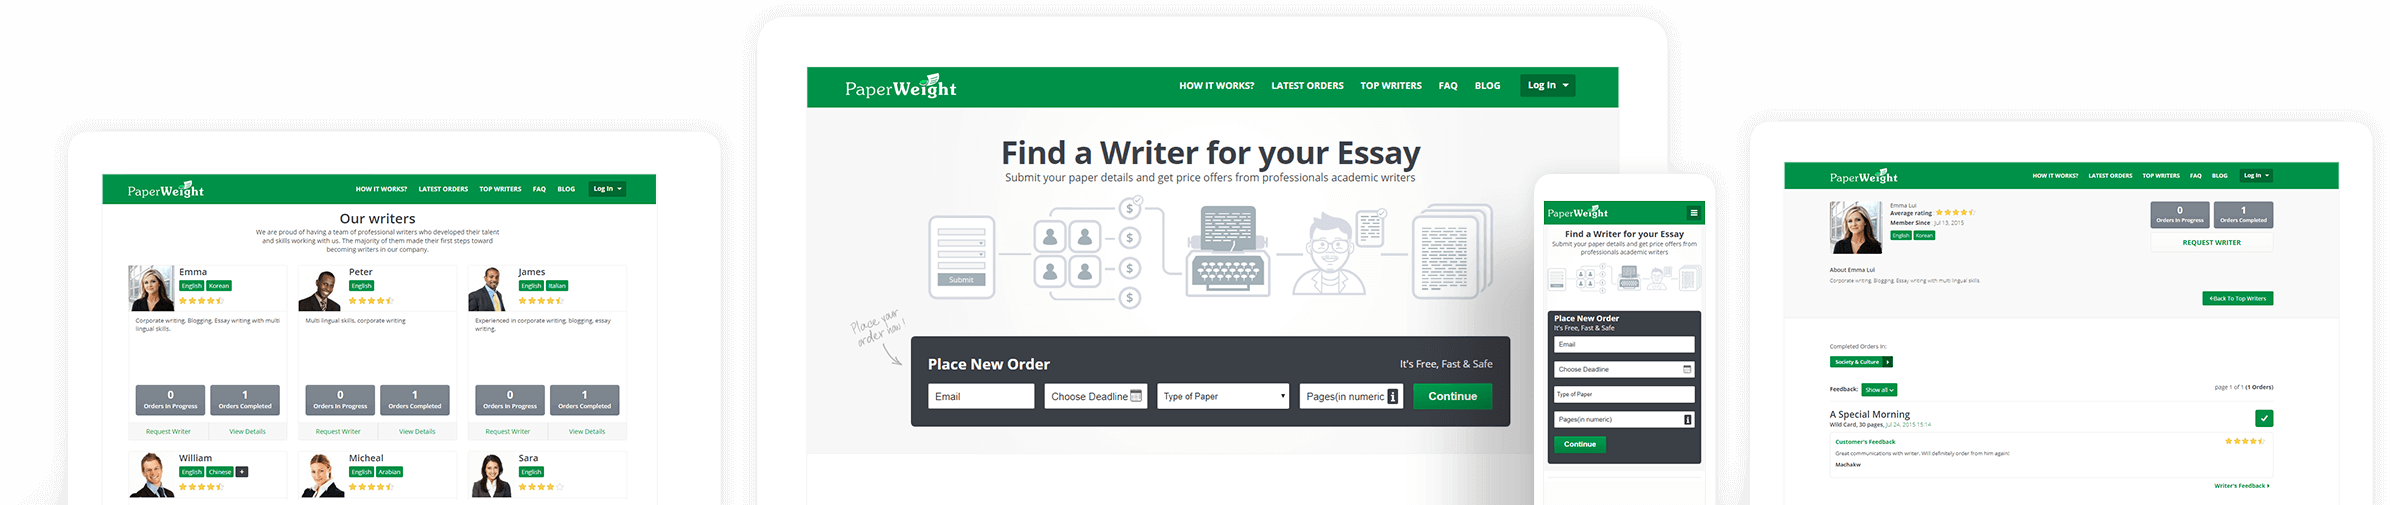 Paperweight Essay Writing Website Builder